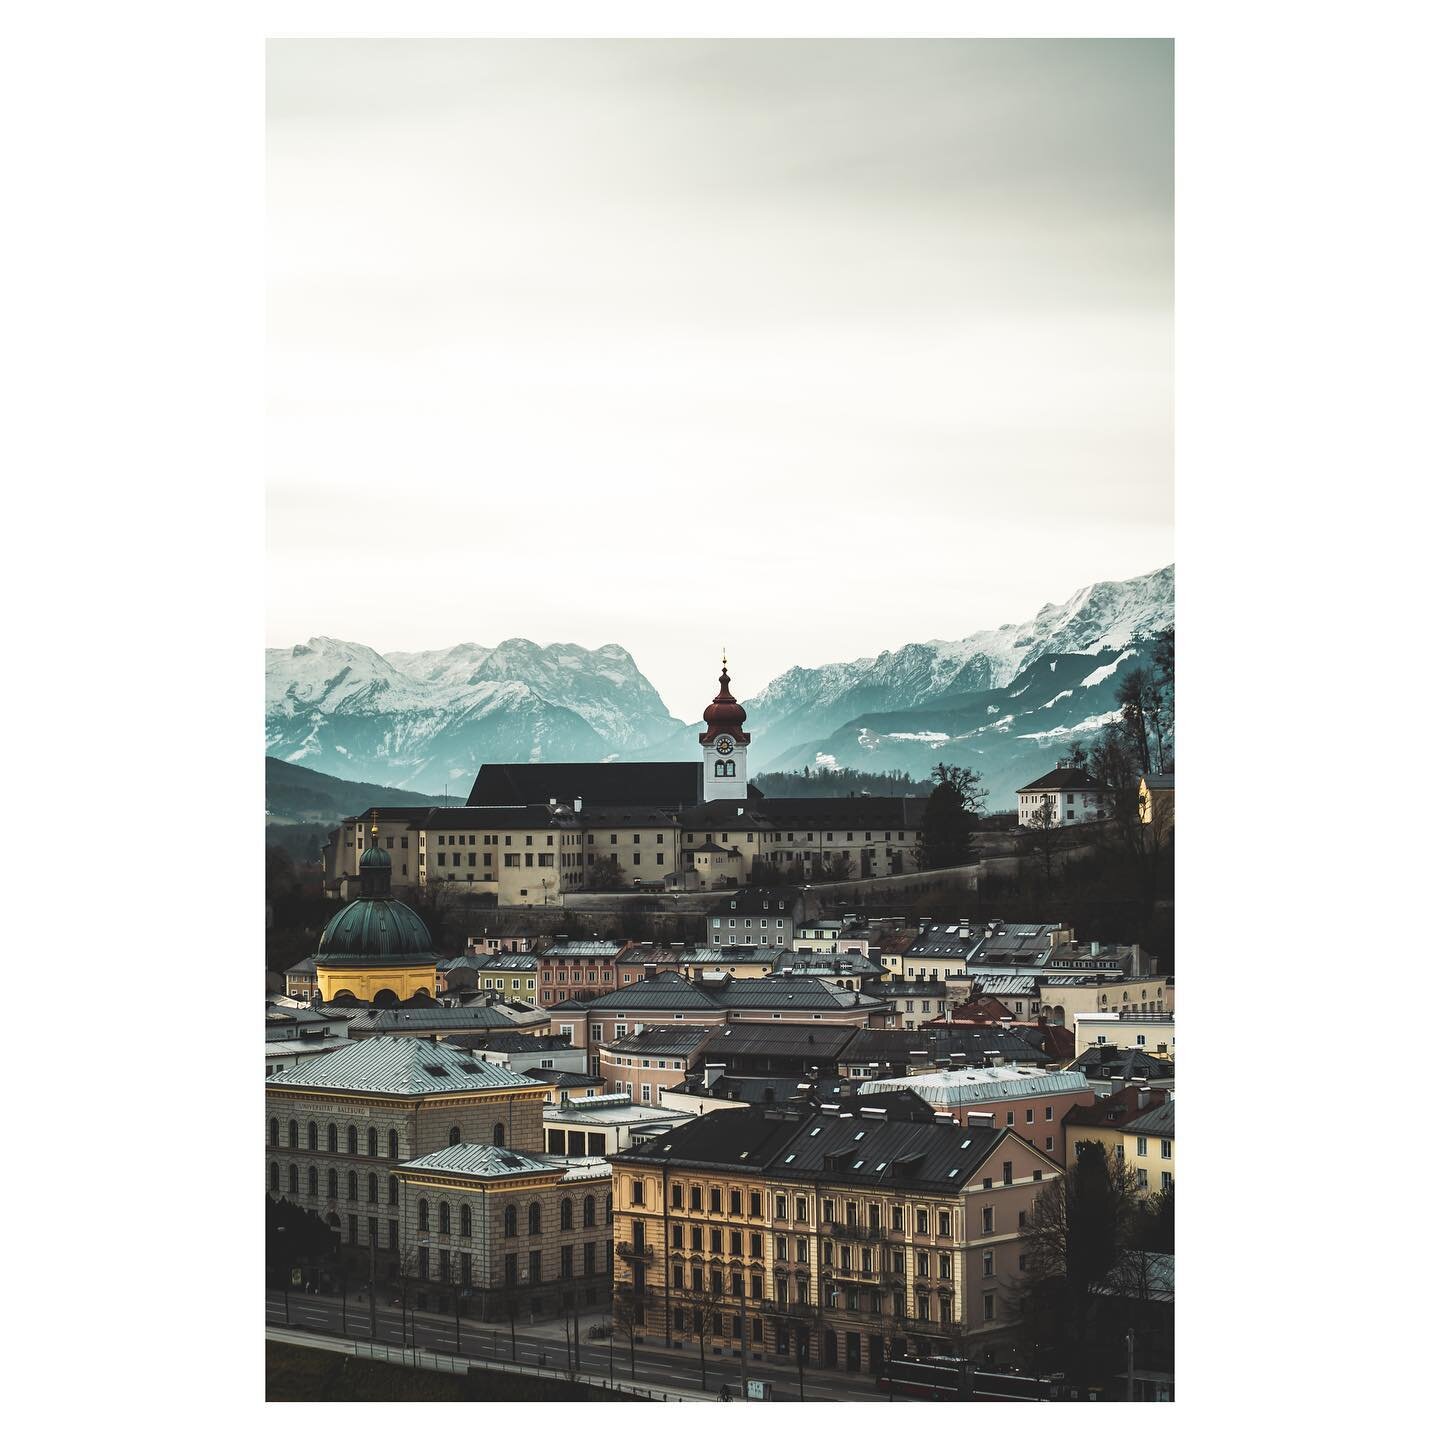 Last time I took images of Salzburg, was when &bdquo;Corona&ldquo; was just ab beer...more to come!
-
-
-
#salzburg #salzburgerland #austria #city #cityscape #urban #urbanphotography #sony #sonya7iii #sonyphotography #sonya7riii #travel #travelphotog